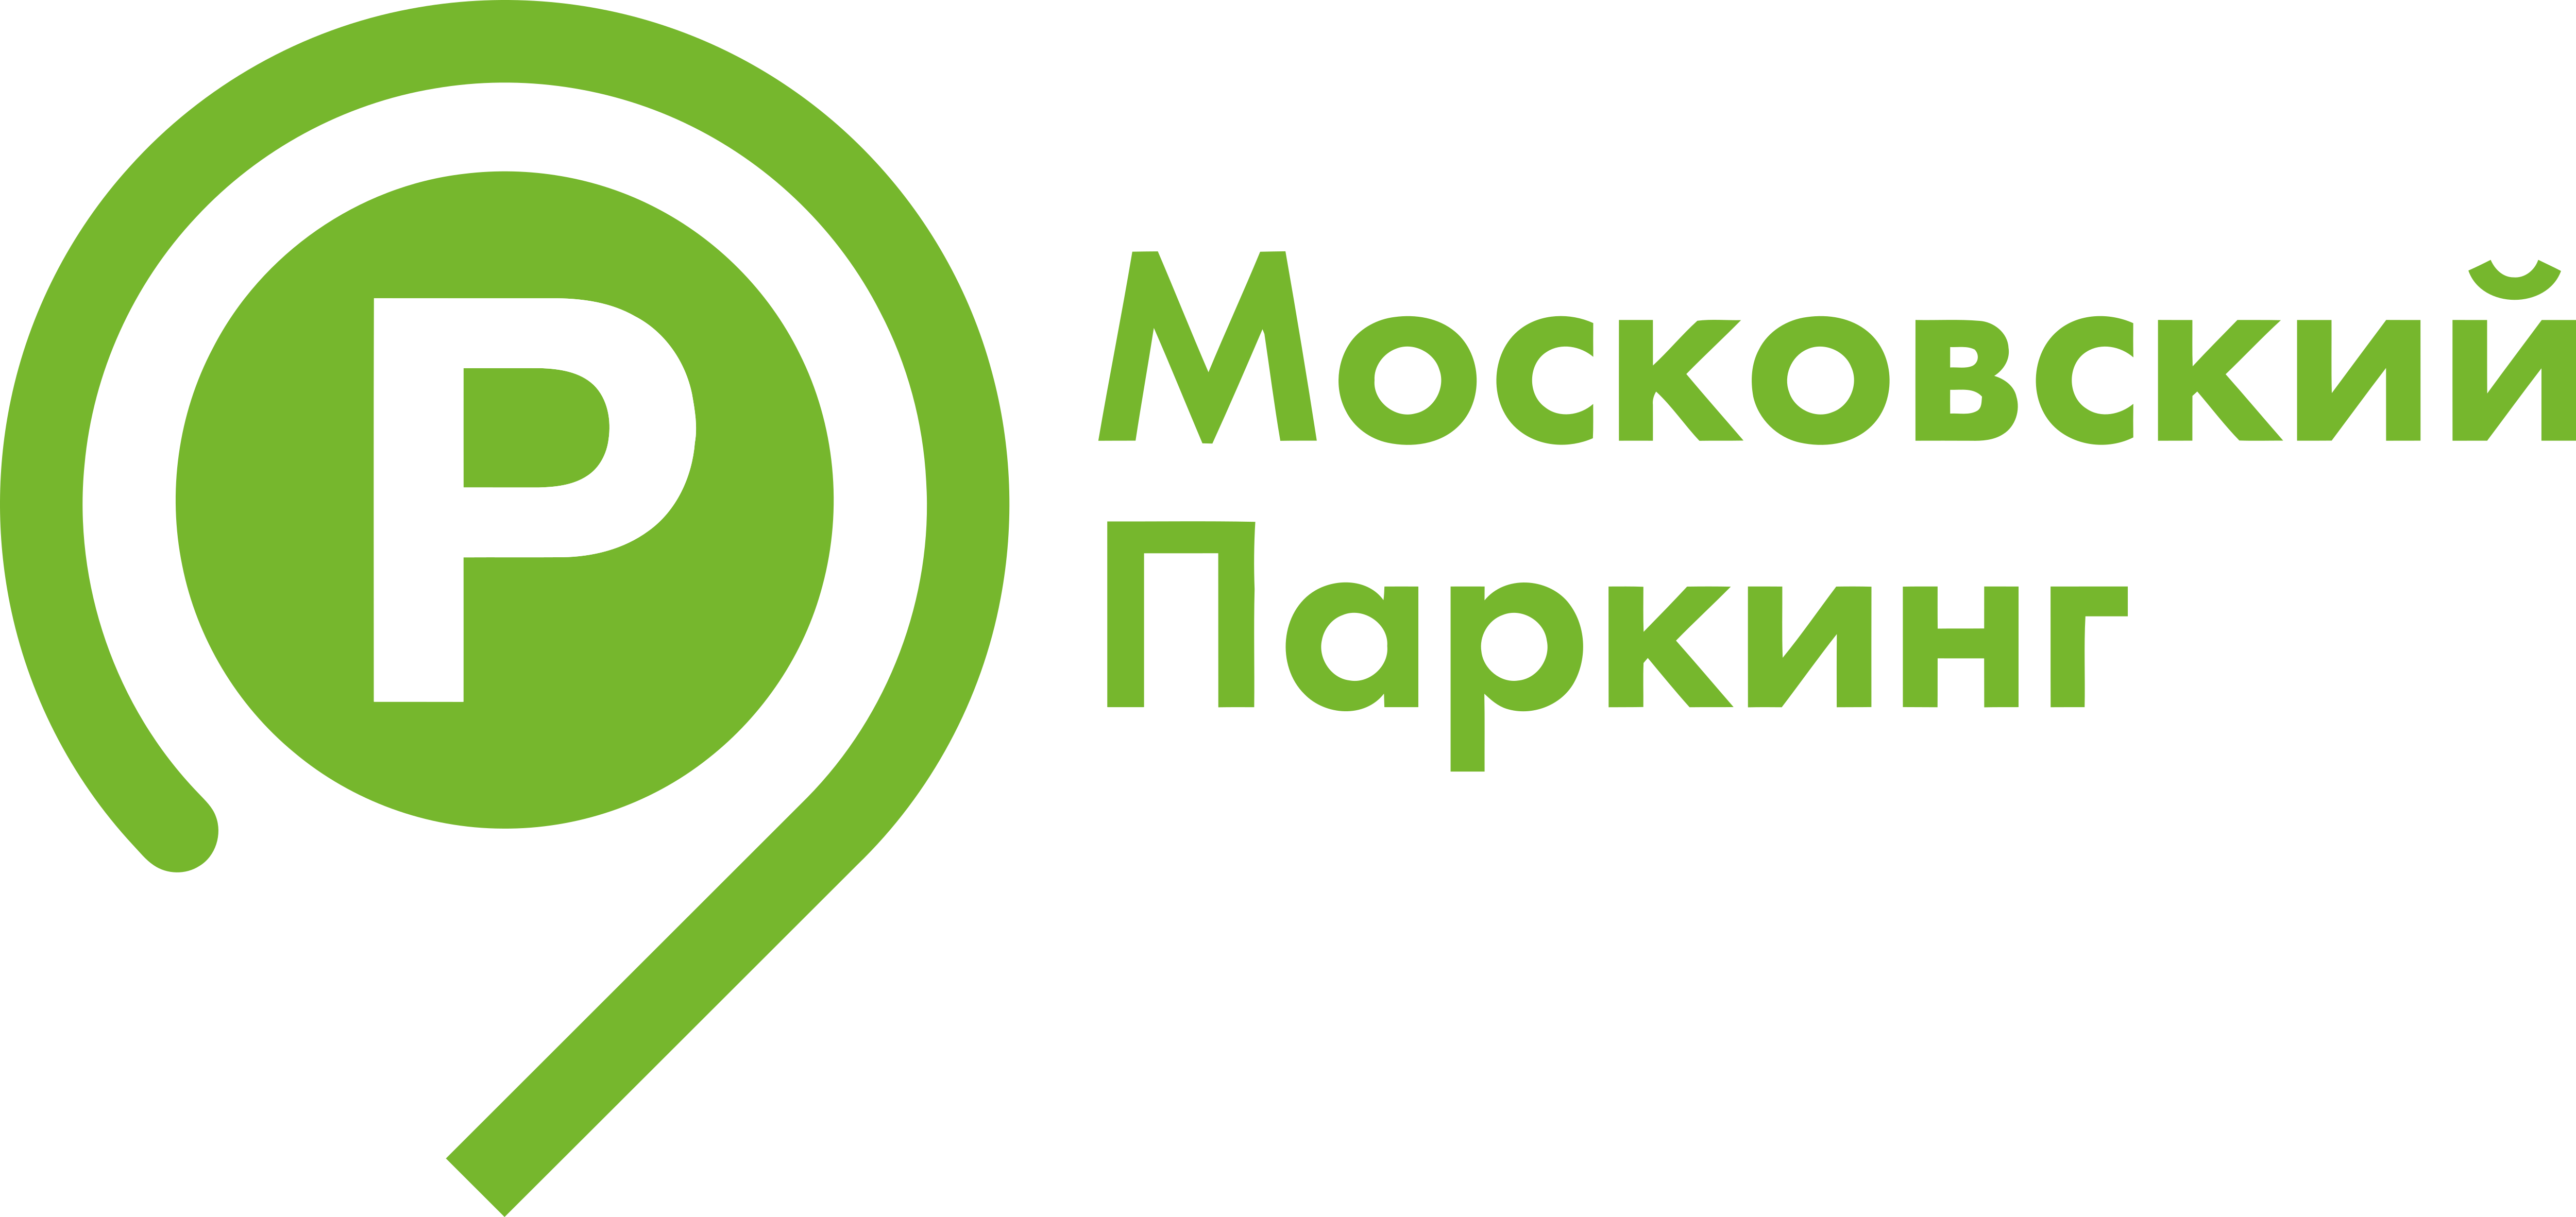 8 495 539. Московский паркинг. АМПП логотип. Моспаркинг логотип. Московские парковки логотип.